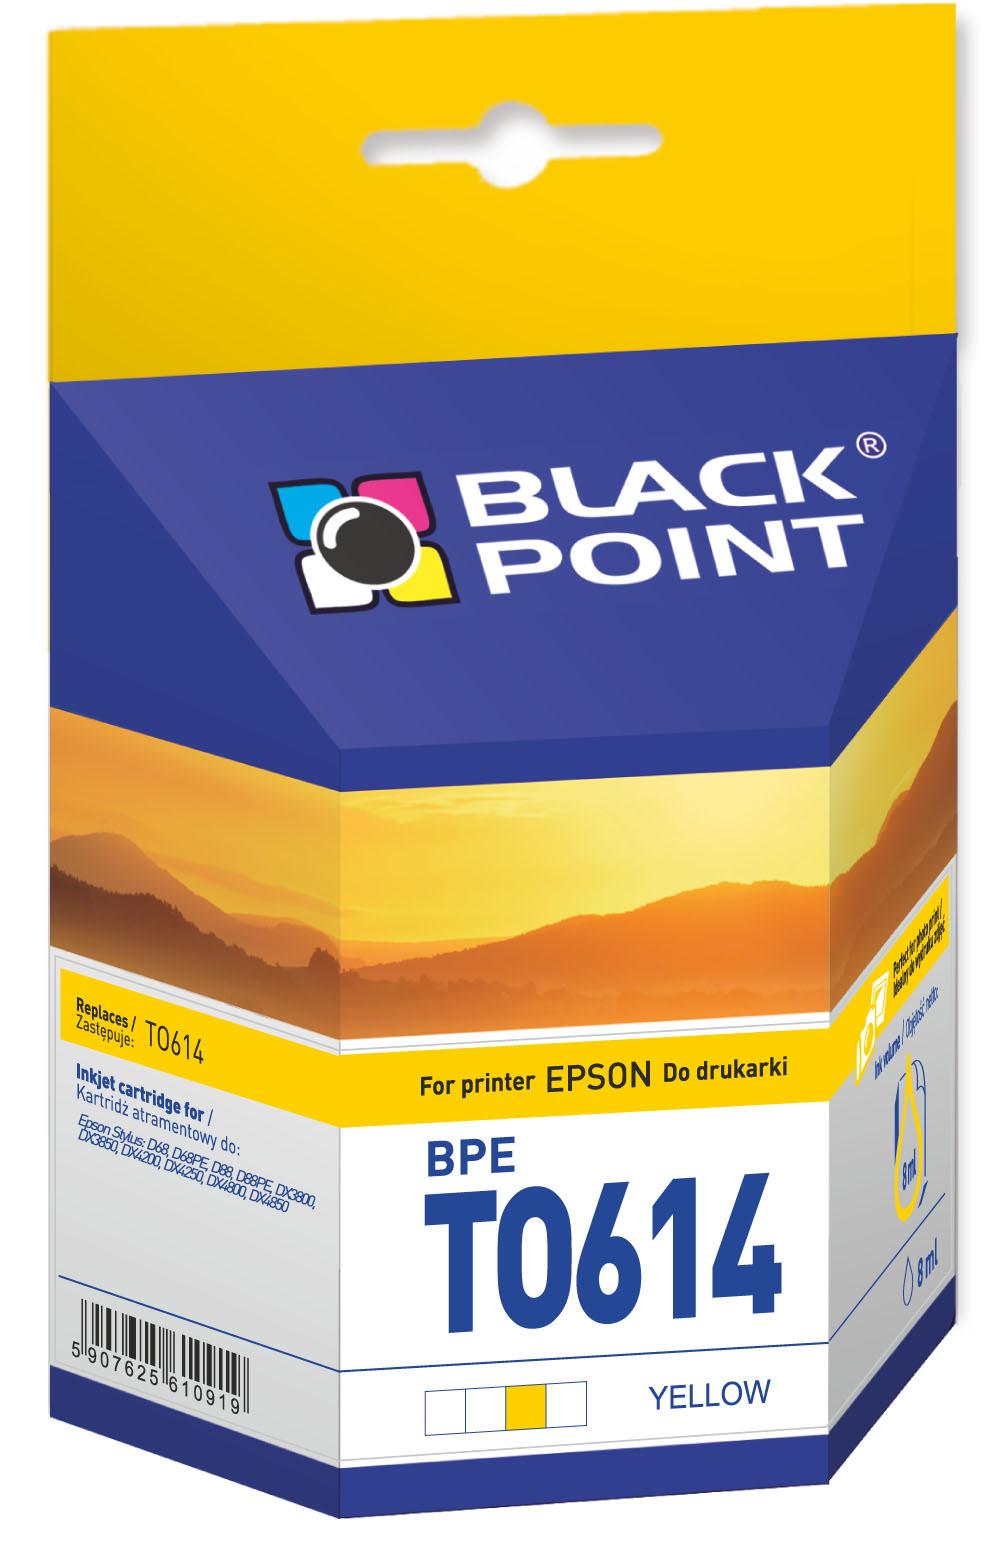 CMYK - Black Point tusz BPET0614 zastpuje Epson T0614, ty